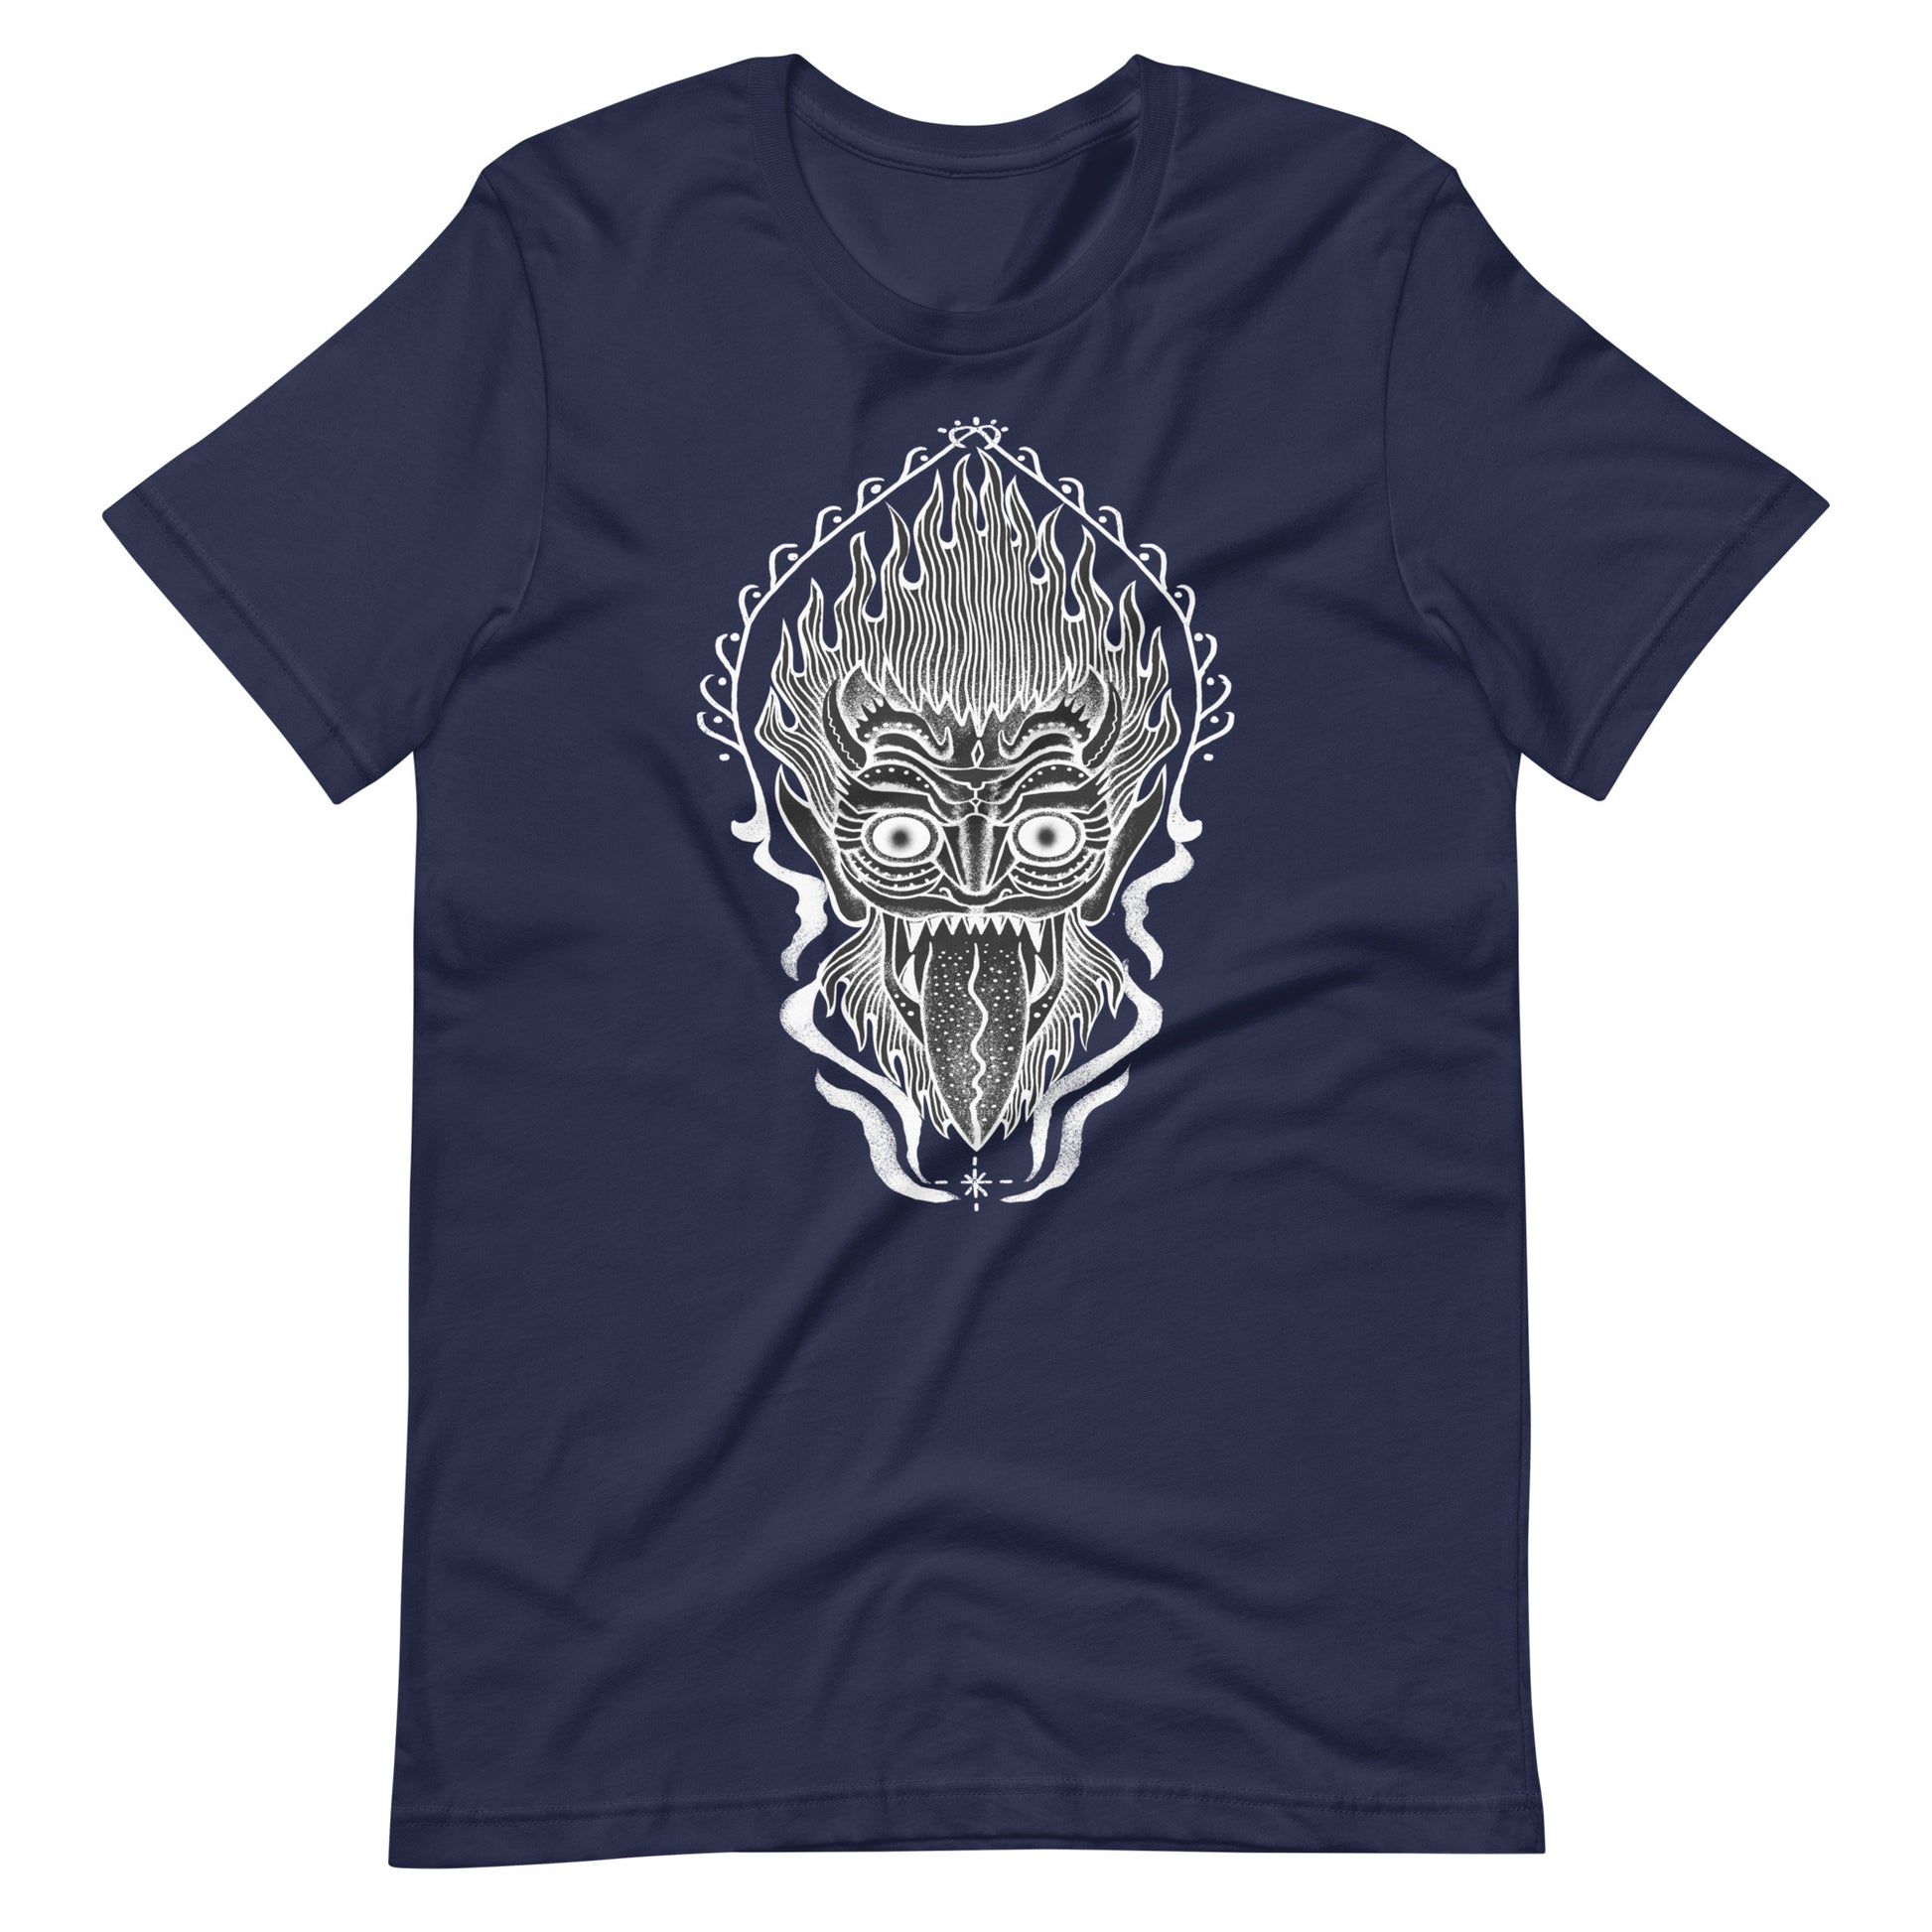 King of Fire - Men's t-shirt - Navy Front